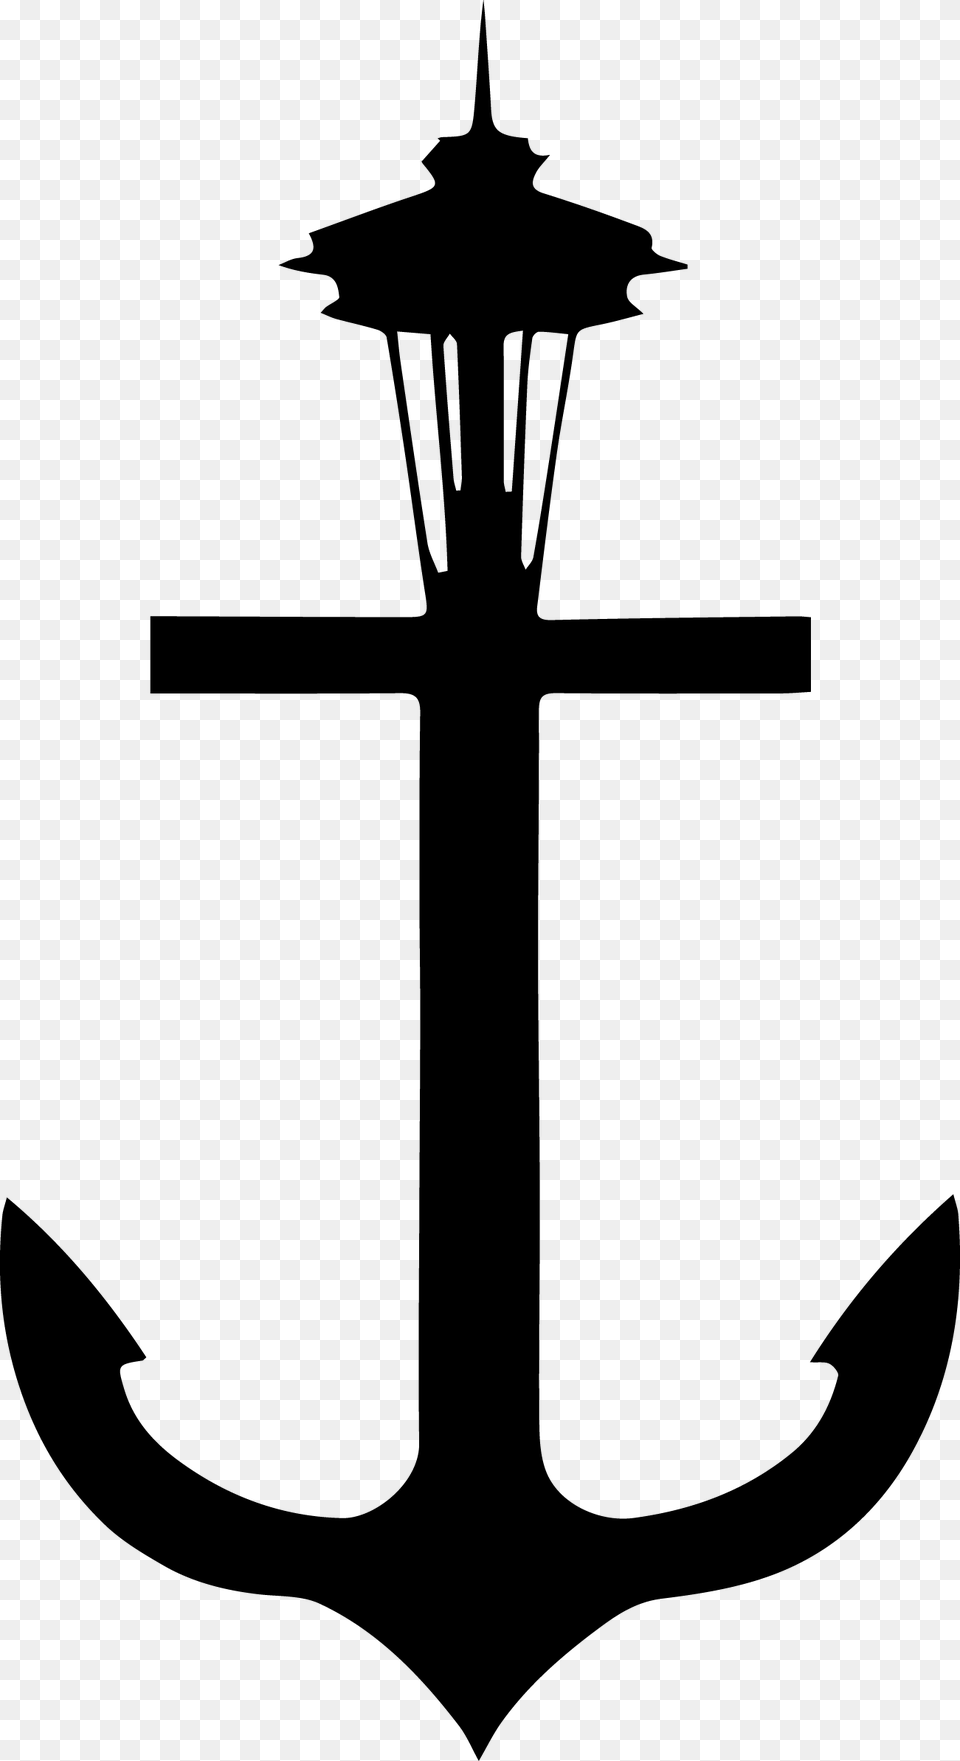 Anchor Black And White Clip Art Ancora Em Fundo Transparente, Electronics, Hardware, Cross, Symbol Png Image